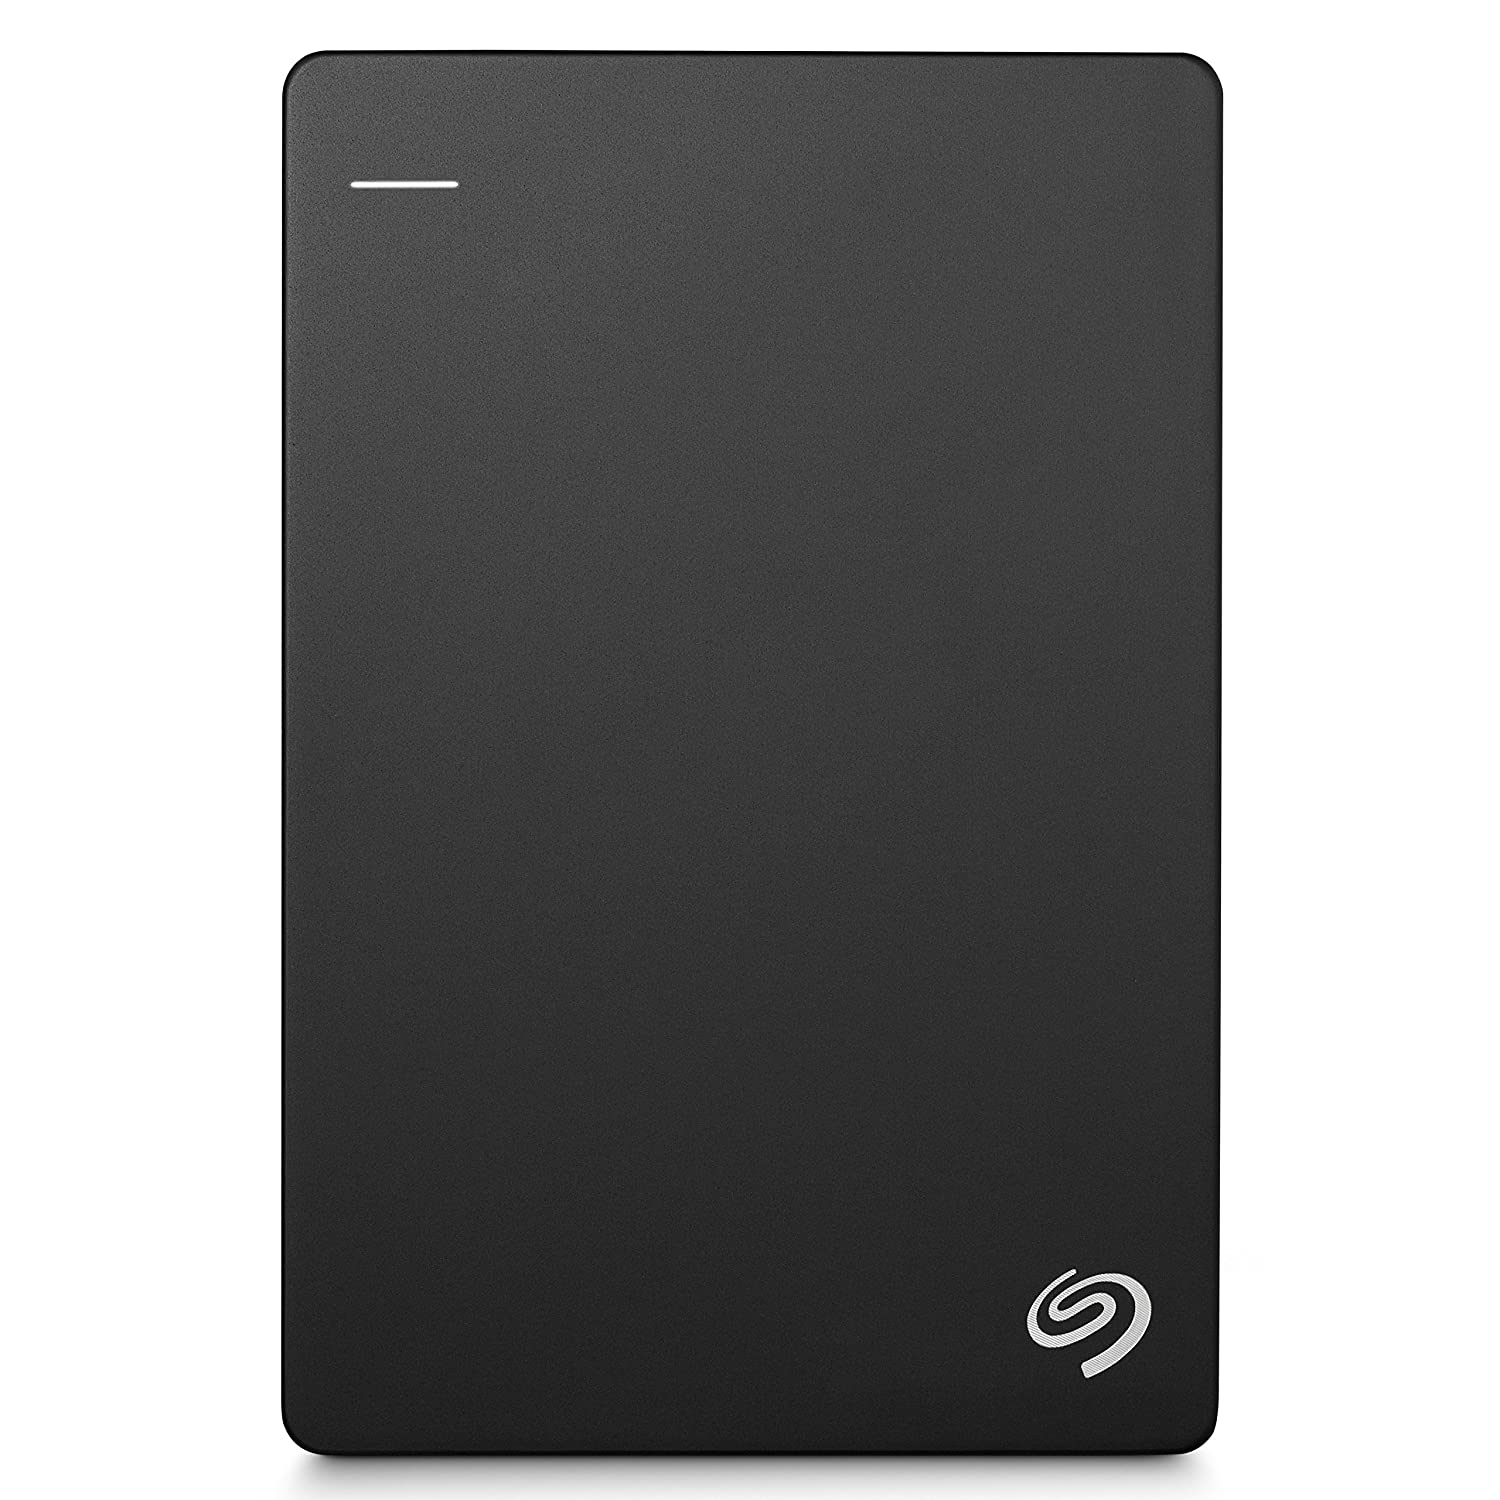 seagate backup plus slim 1tb portable external hard drive for mac usb 3.0 (stds1000100)